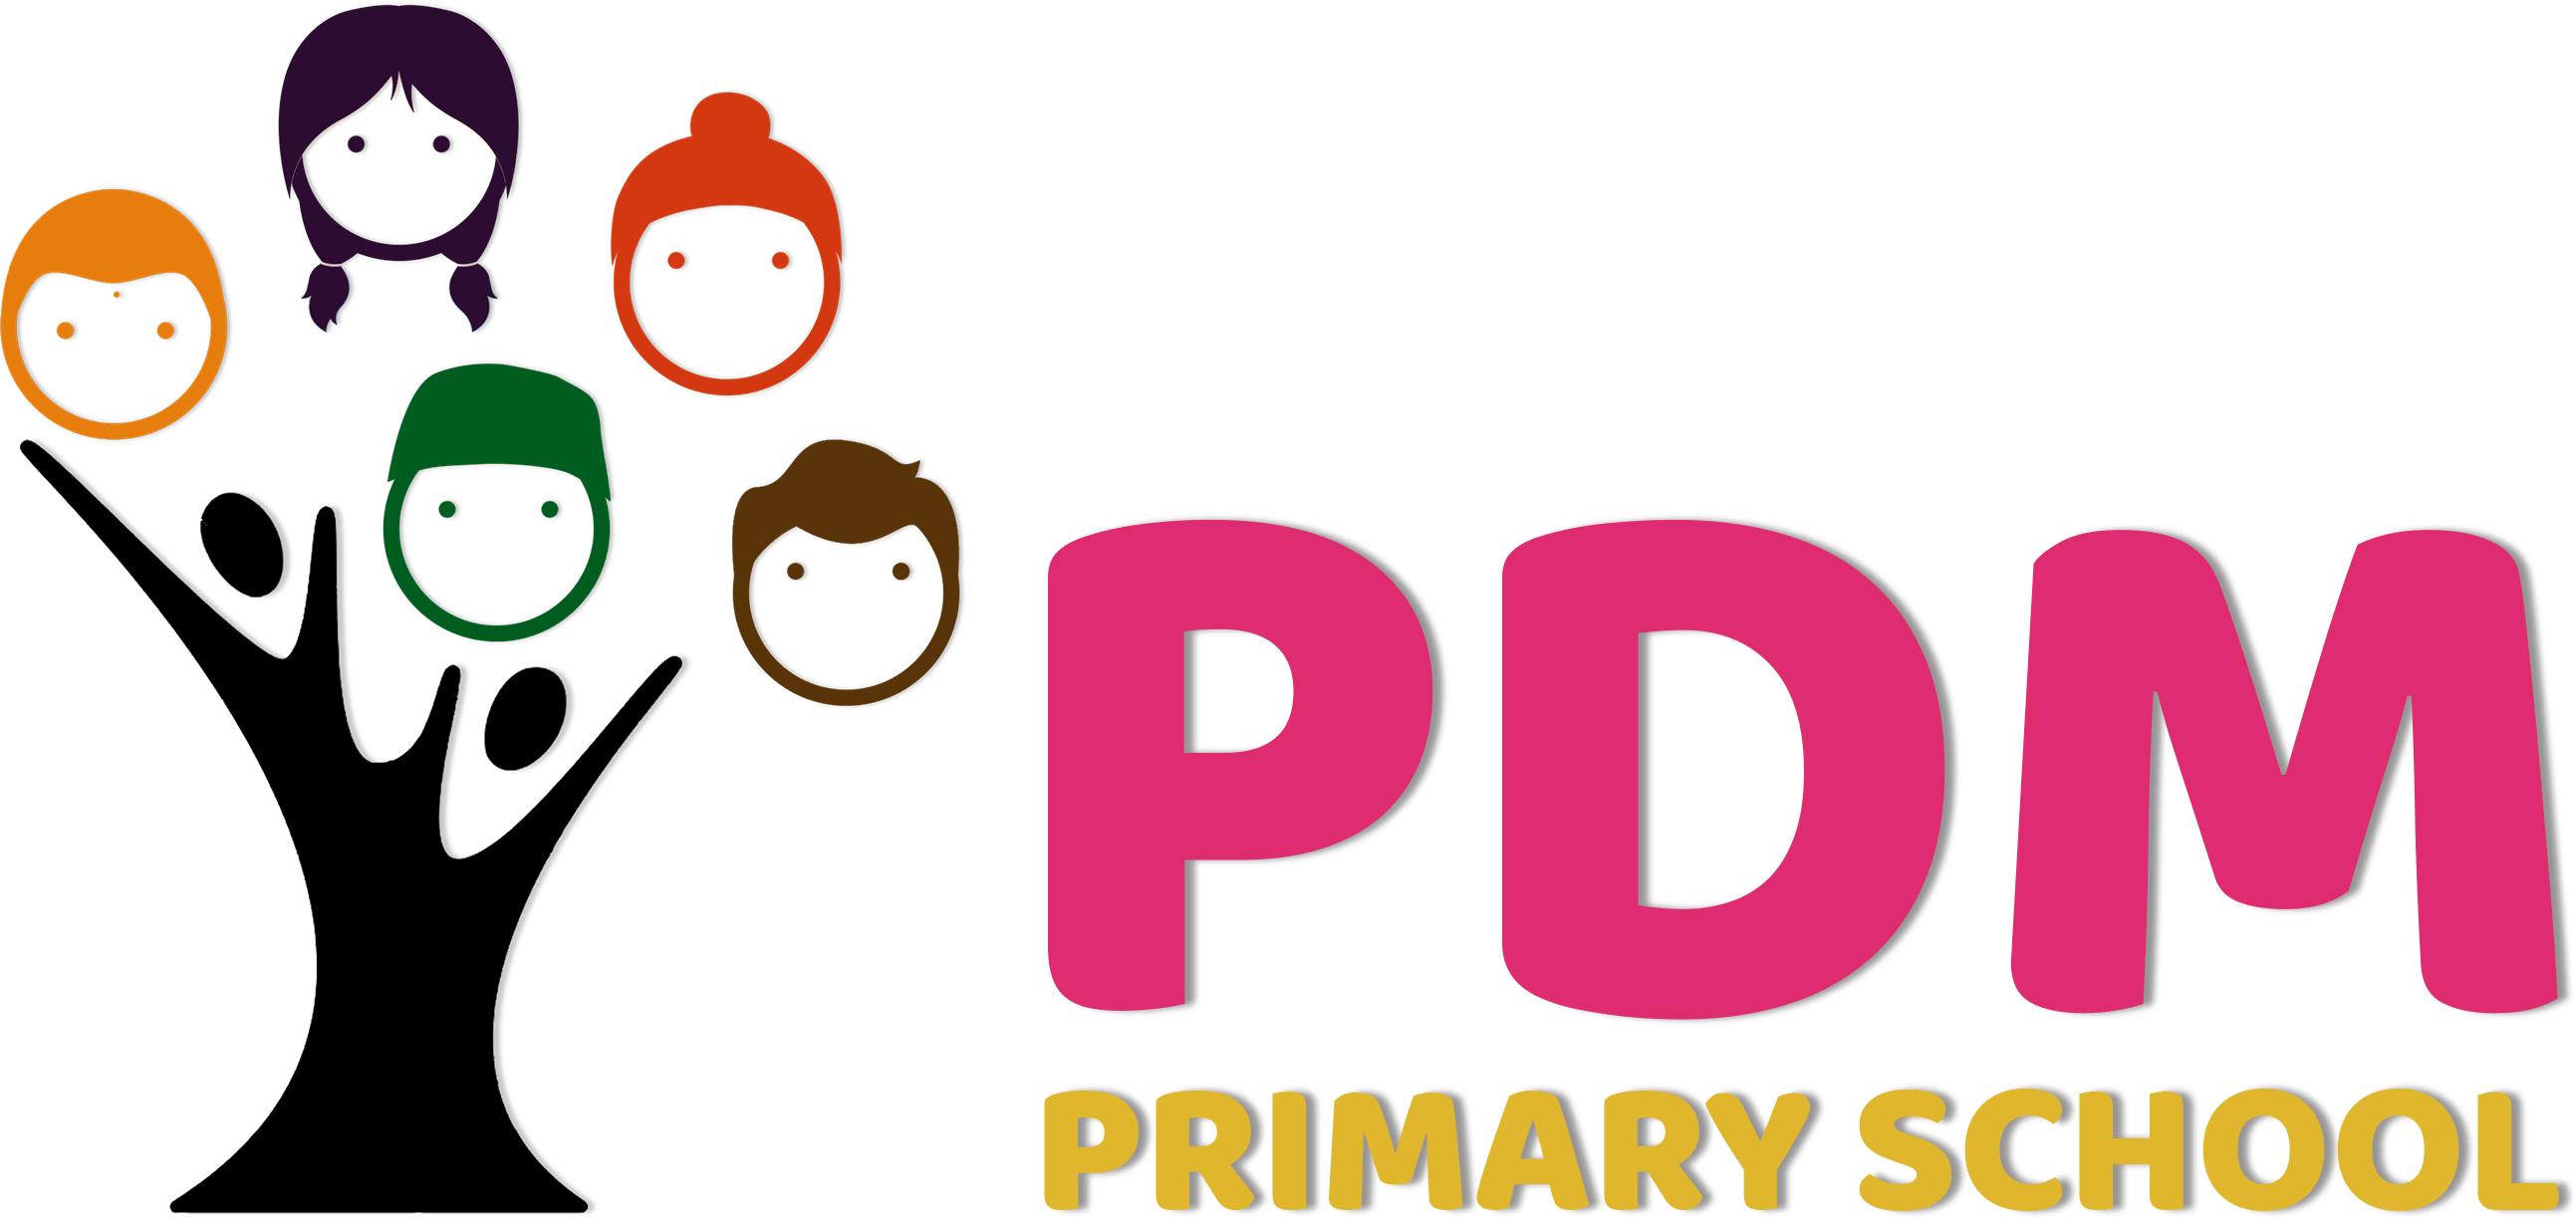 PDM PRIMARY SCHOOL|Universities|Education